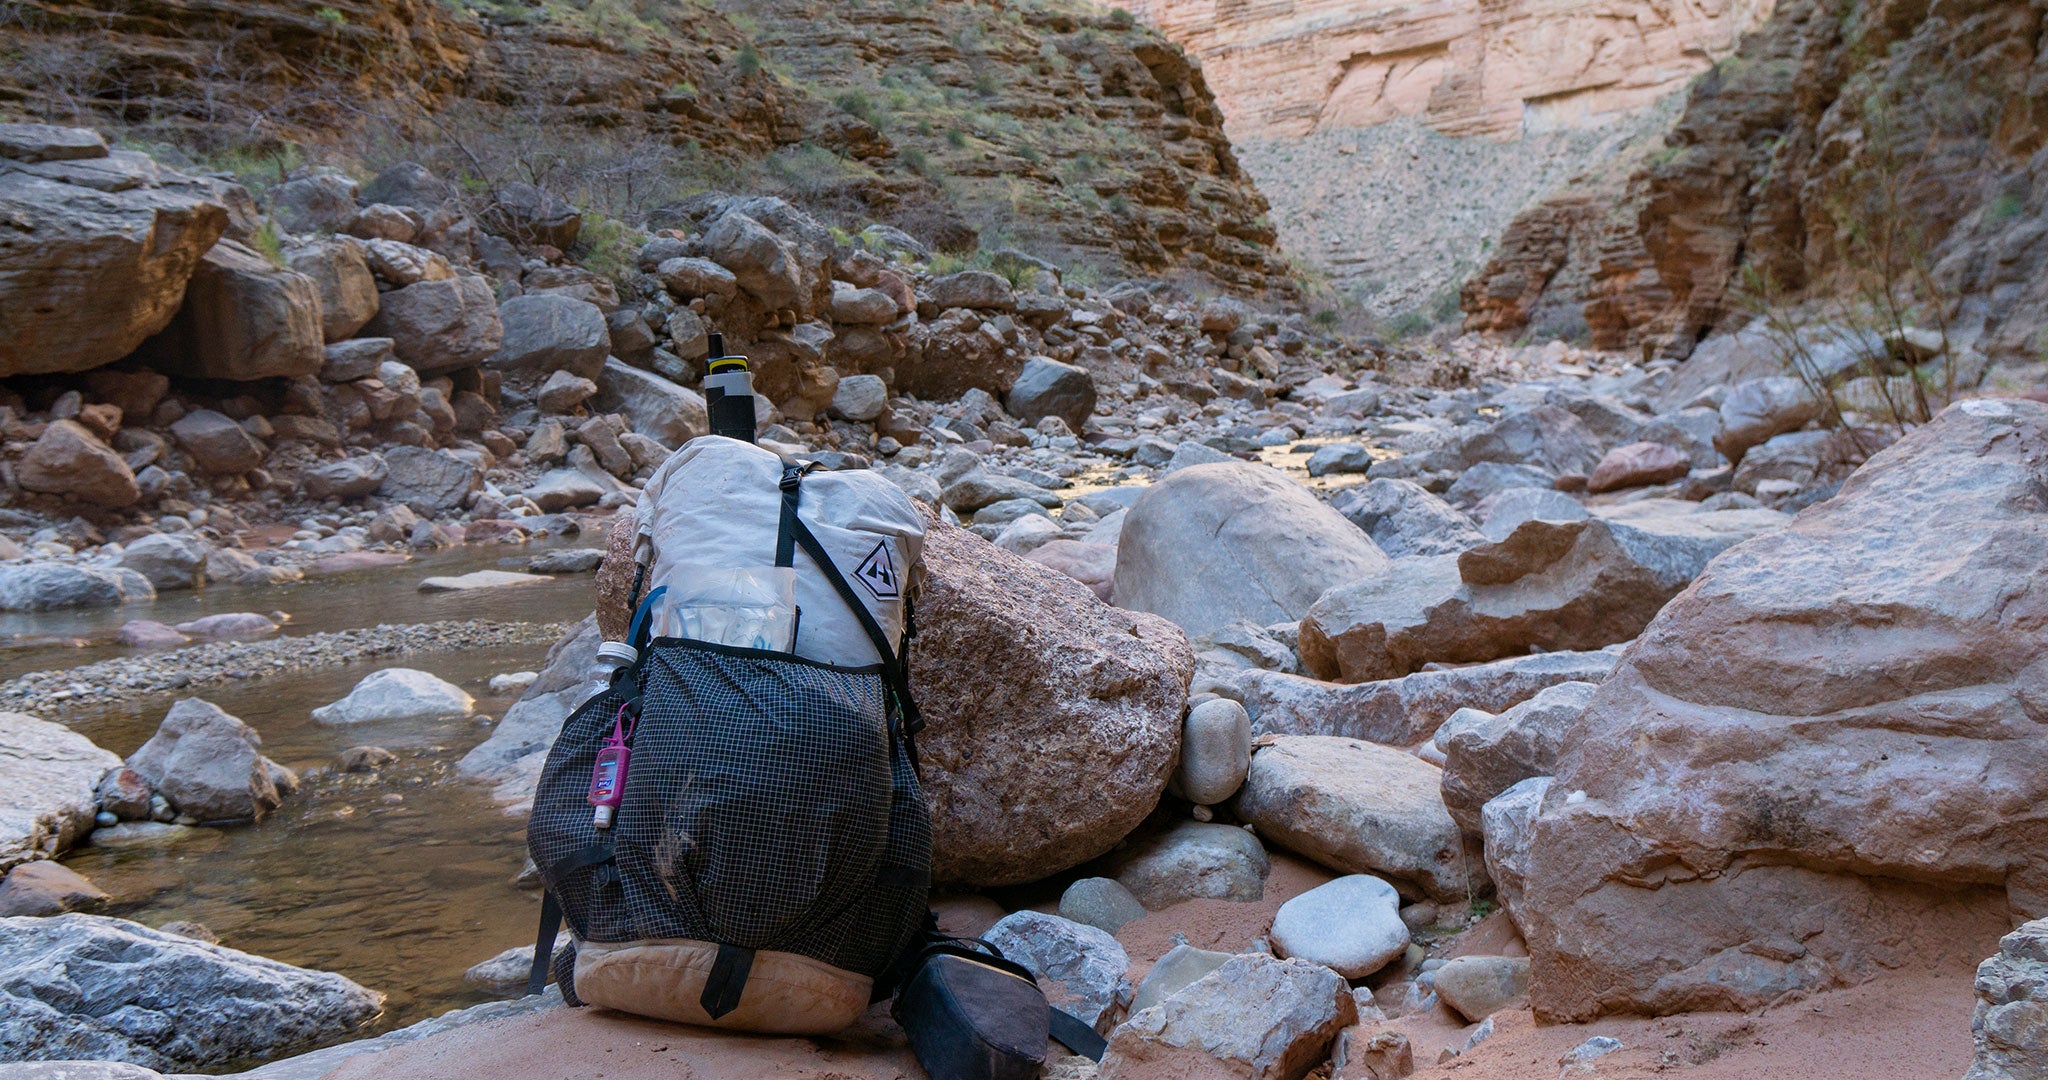 Hyperlite Mountain Gear 3400 Southwest Ultralight Backpack propped up against some rocks